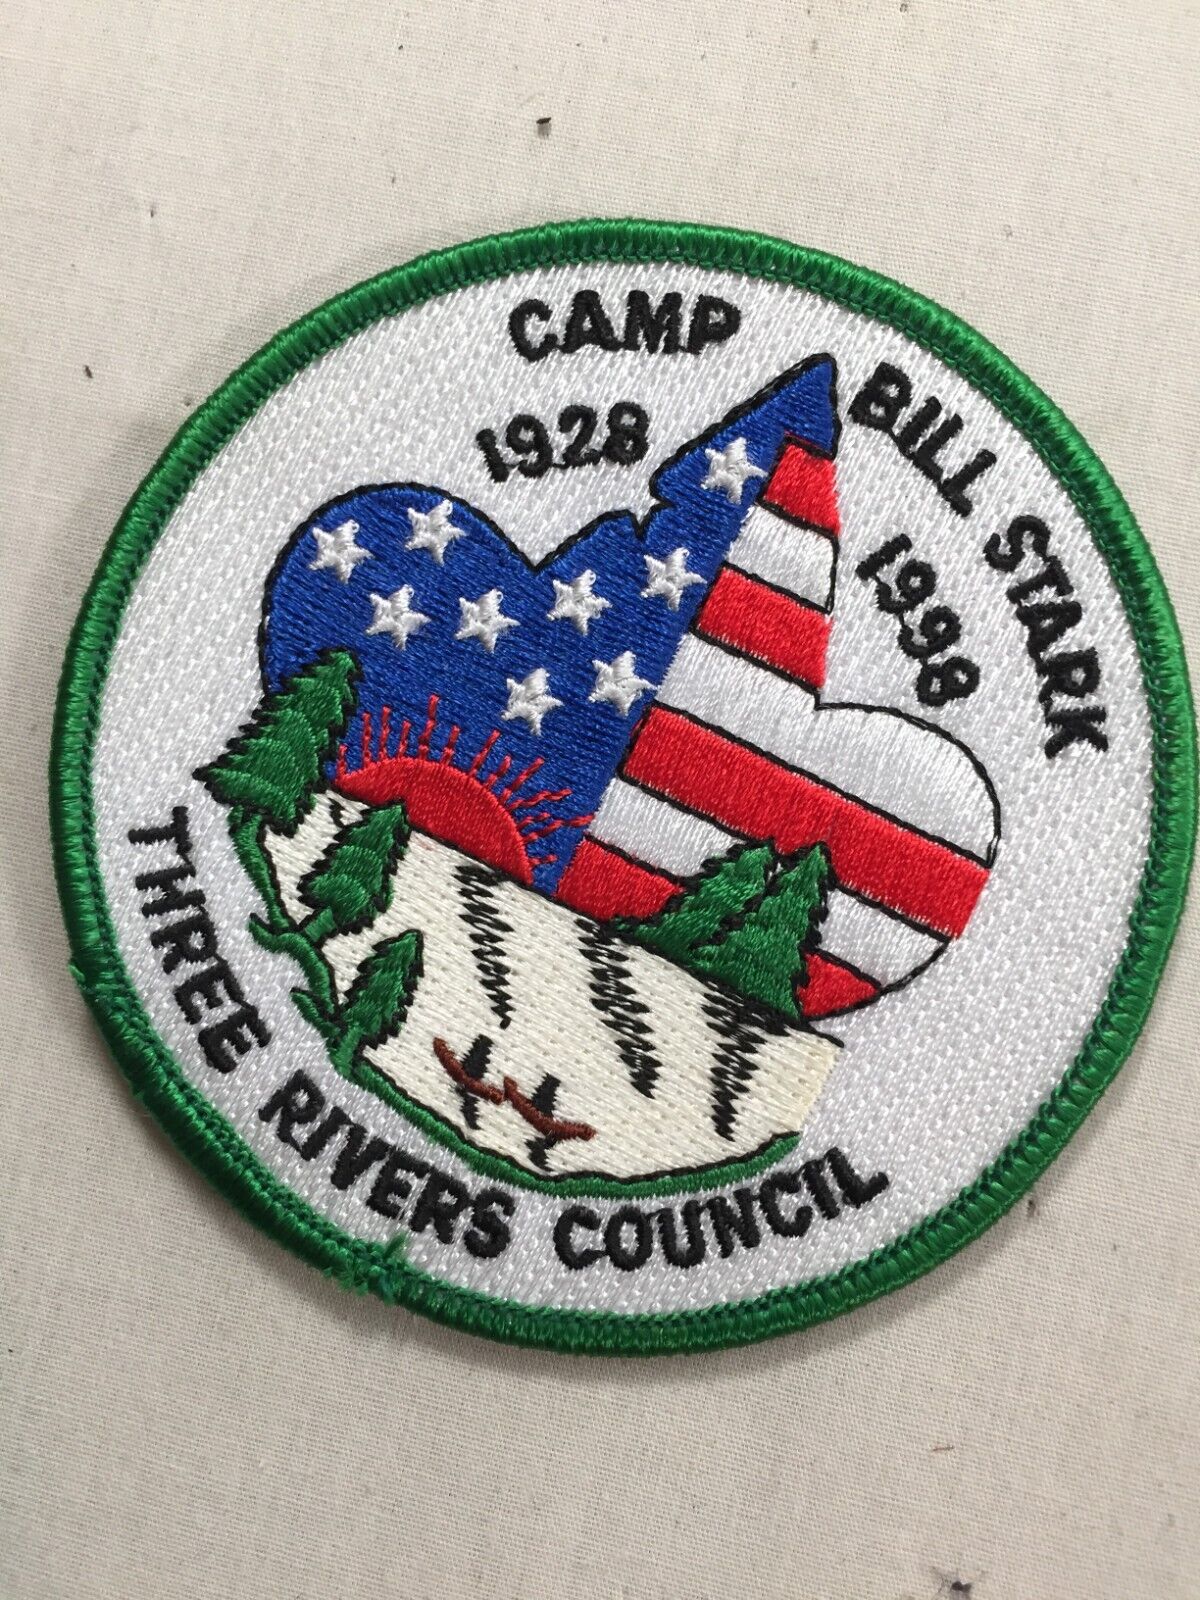 1998 Three Rivers Council Bill Stark Camp BSA Camp Patch